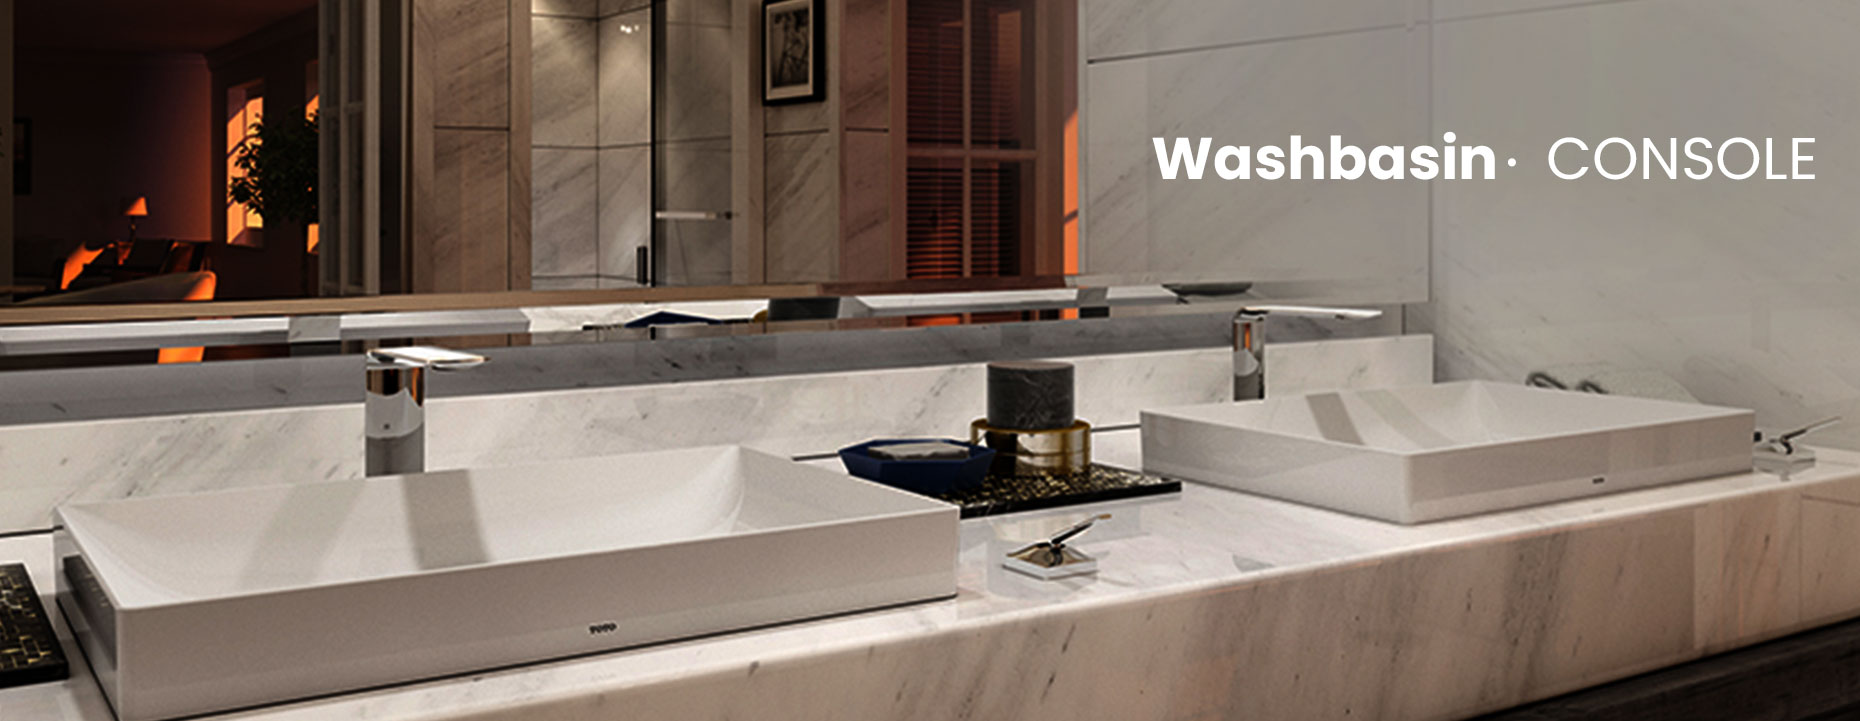 Luxurious Console Wash Basin  w / Automatic Sensor Faucet